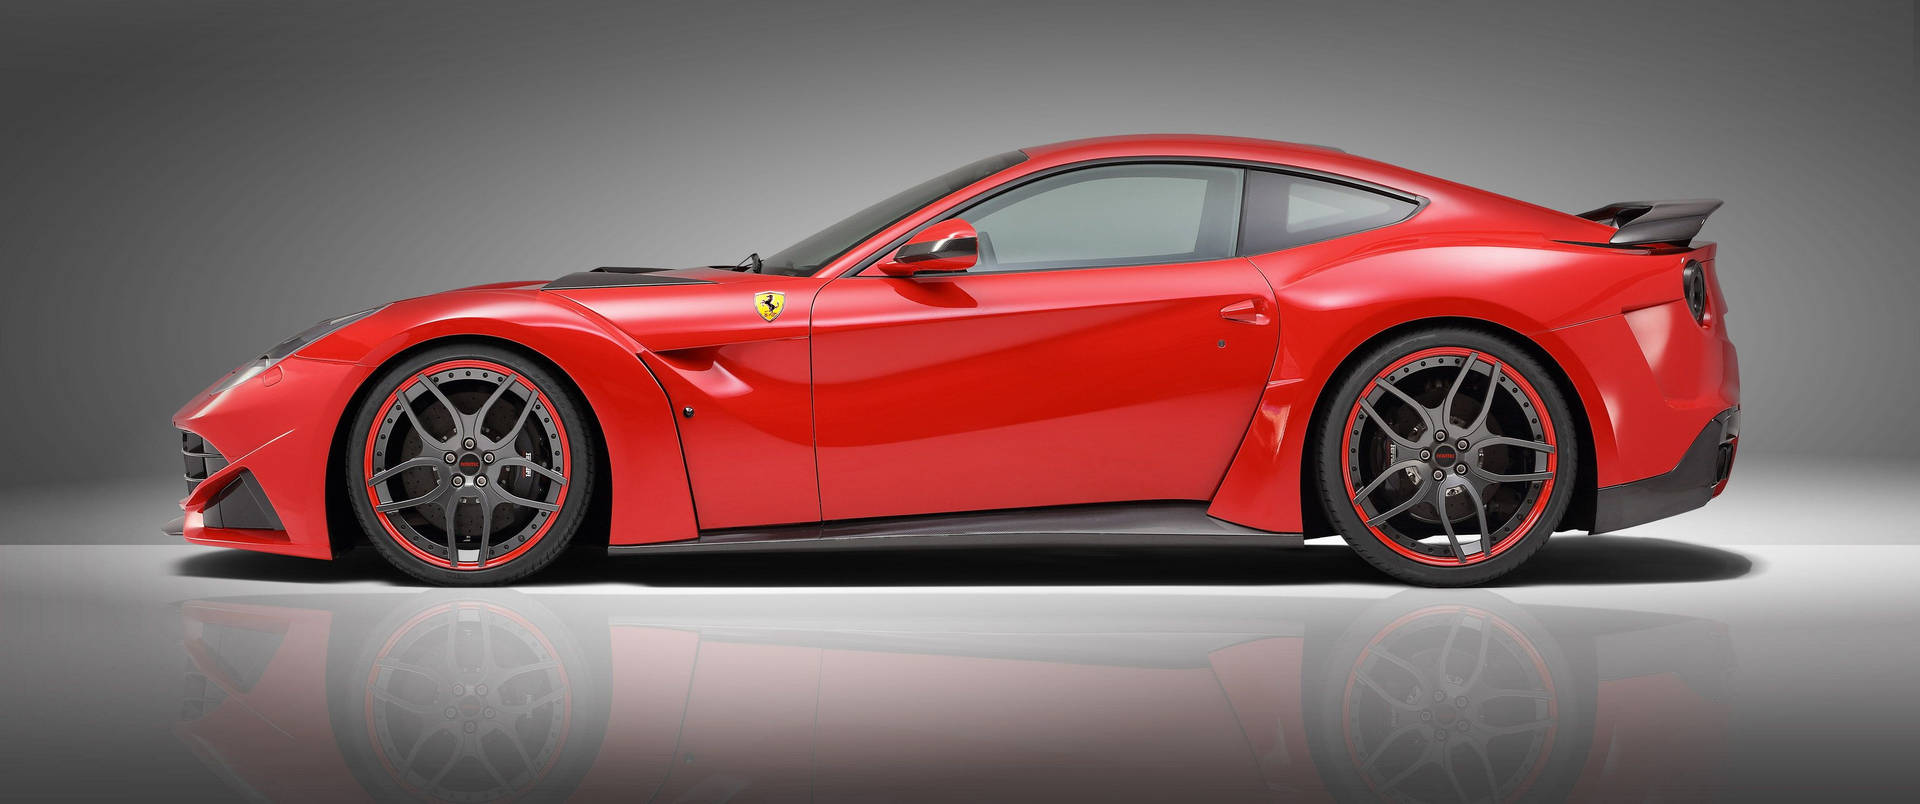 3440x1440 Car Ferrari F12 Background